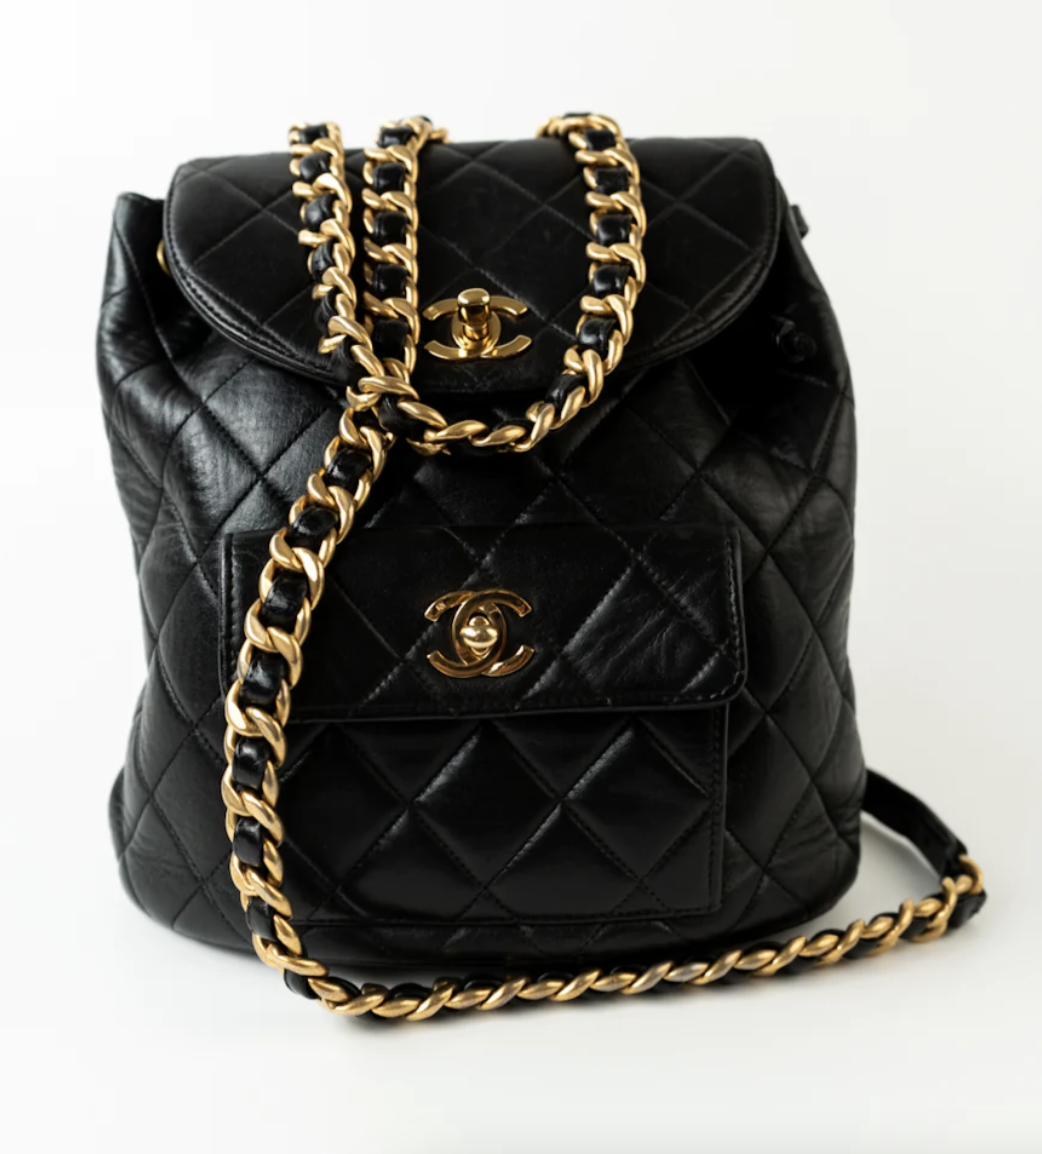 Vintage Louis Vuitton, Gucci, Chanel Handbags & Jewelry Lookbook by SHOPBOP  - NAWO